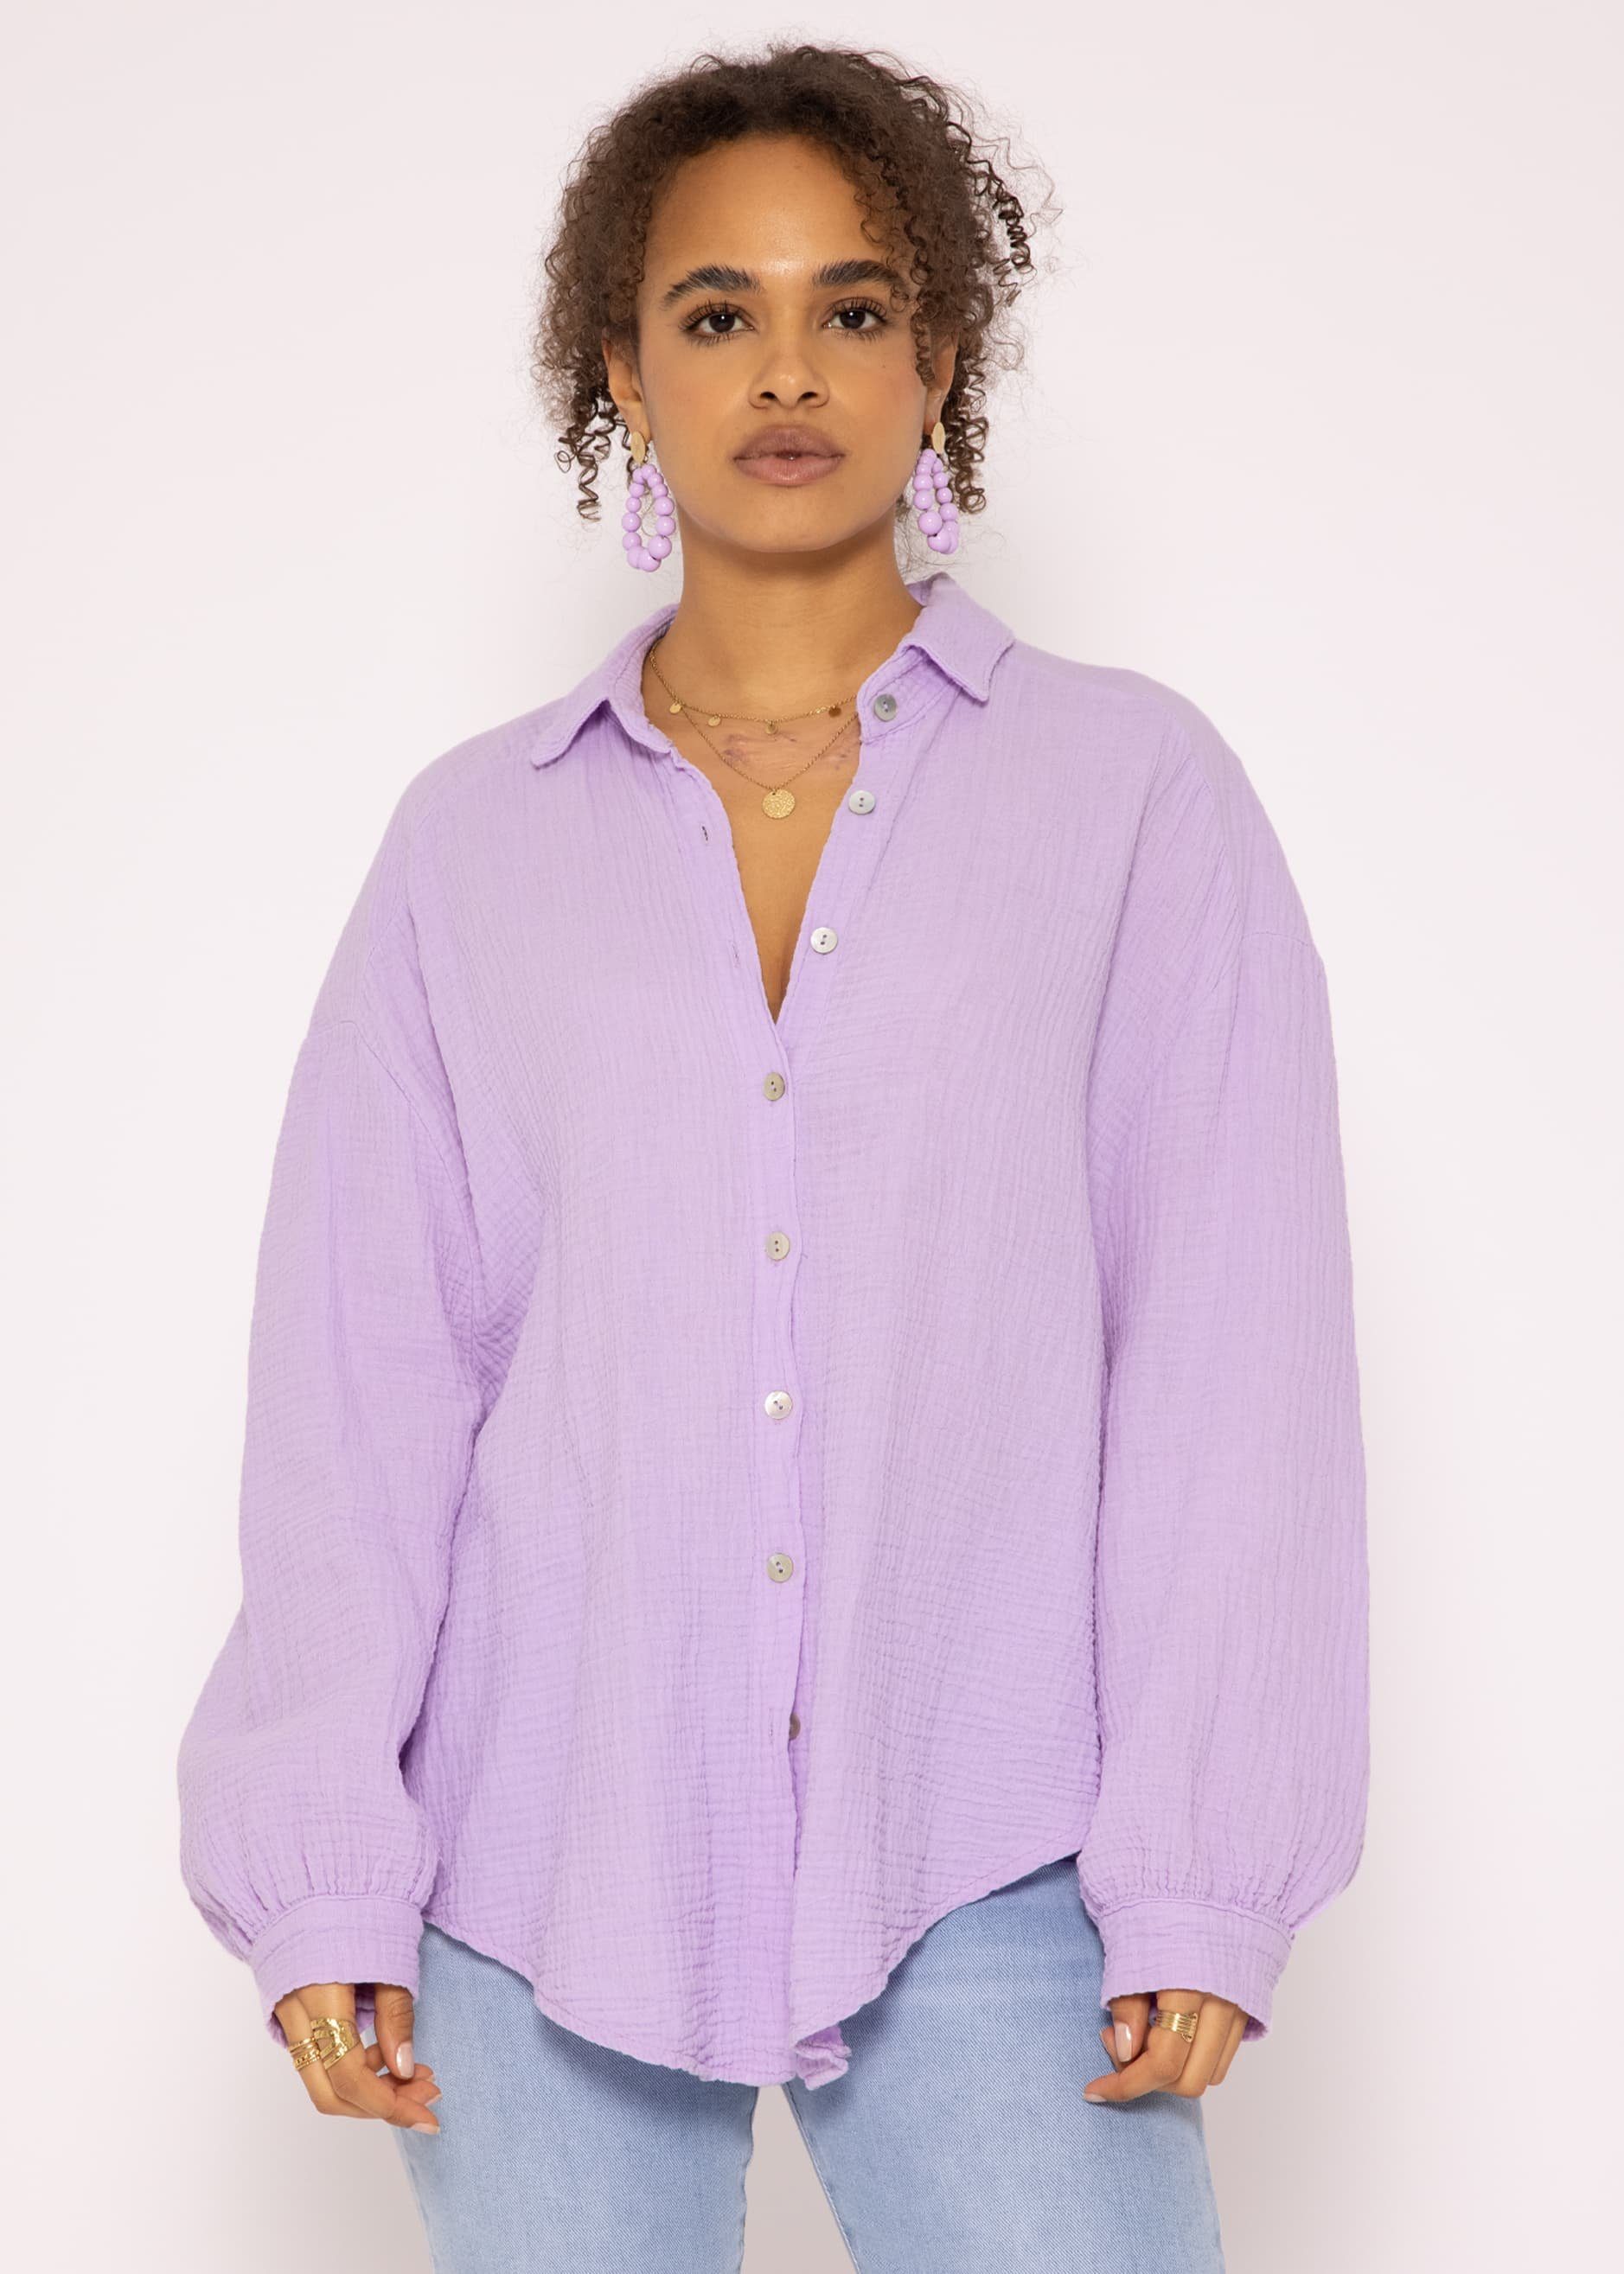 SASSYCLASSY Longbluse Oversize Musselin Bluse Damen Langarm Hemdbluse lang aus Baumwolle mit V-Ausschnitt, One Size (Gr. 36-48) Flieder